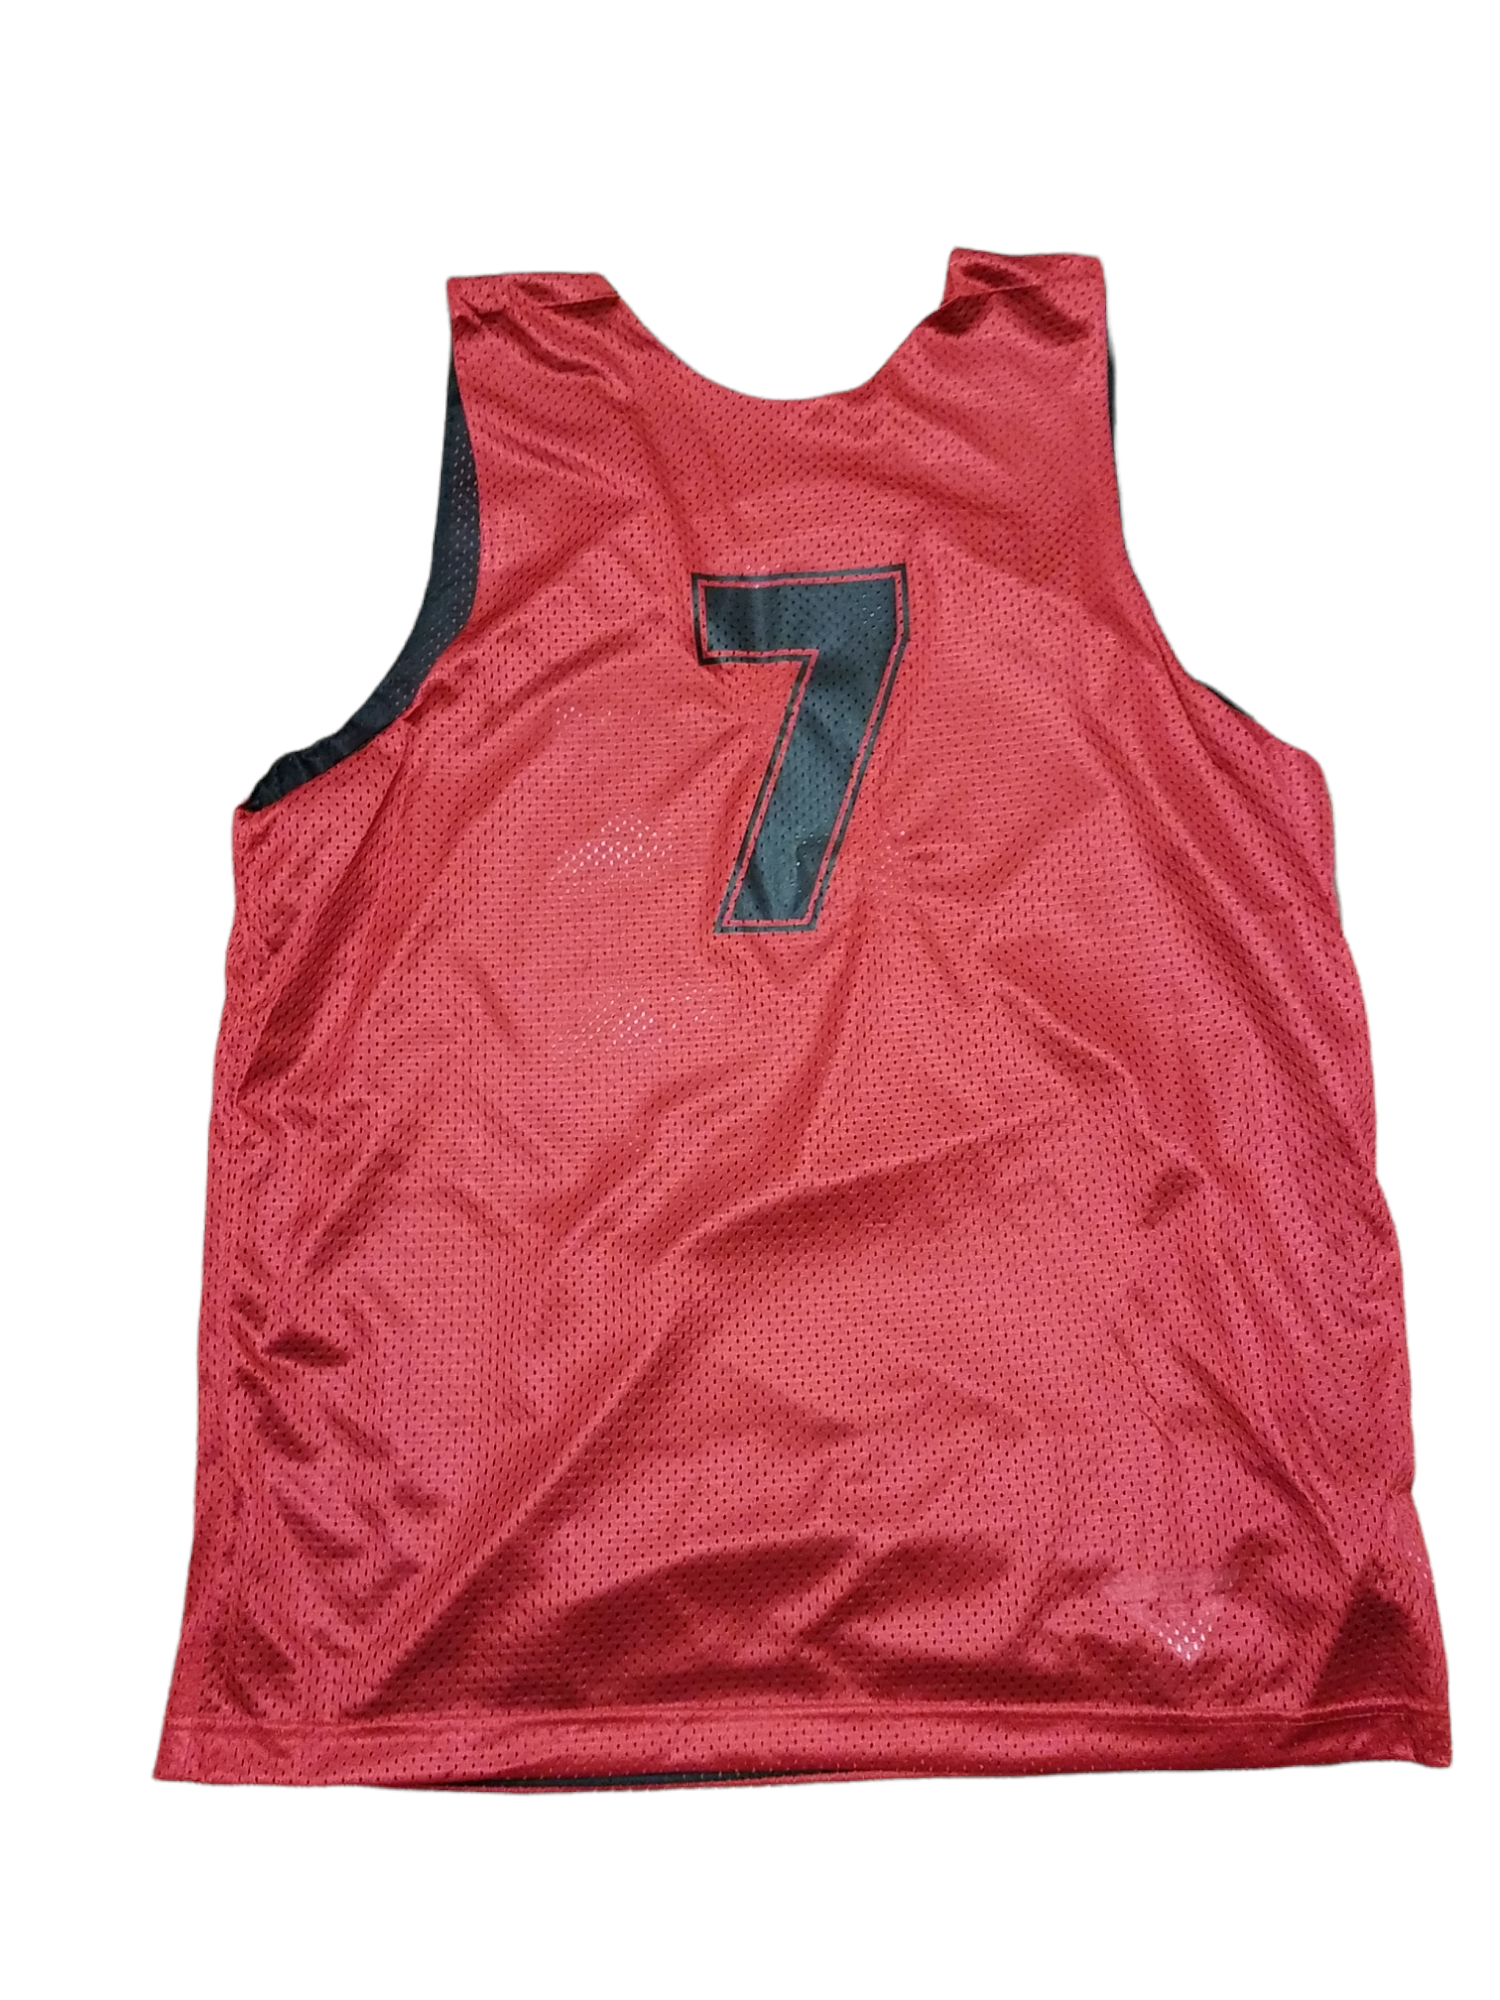 Faith Gang Reversible Basketball Jersey (Unisex) - 3X / White/Black